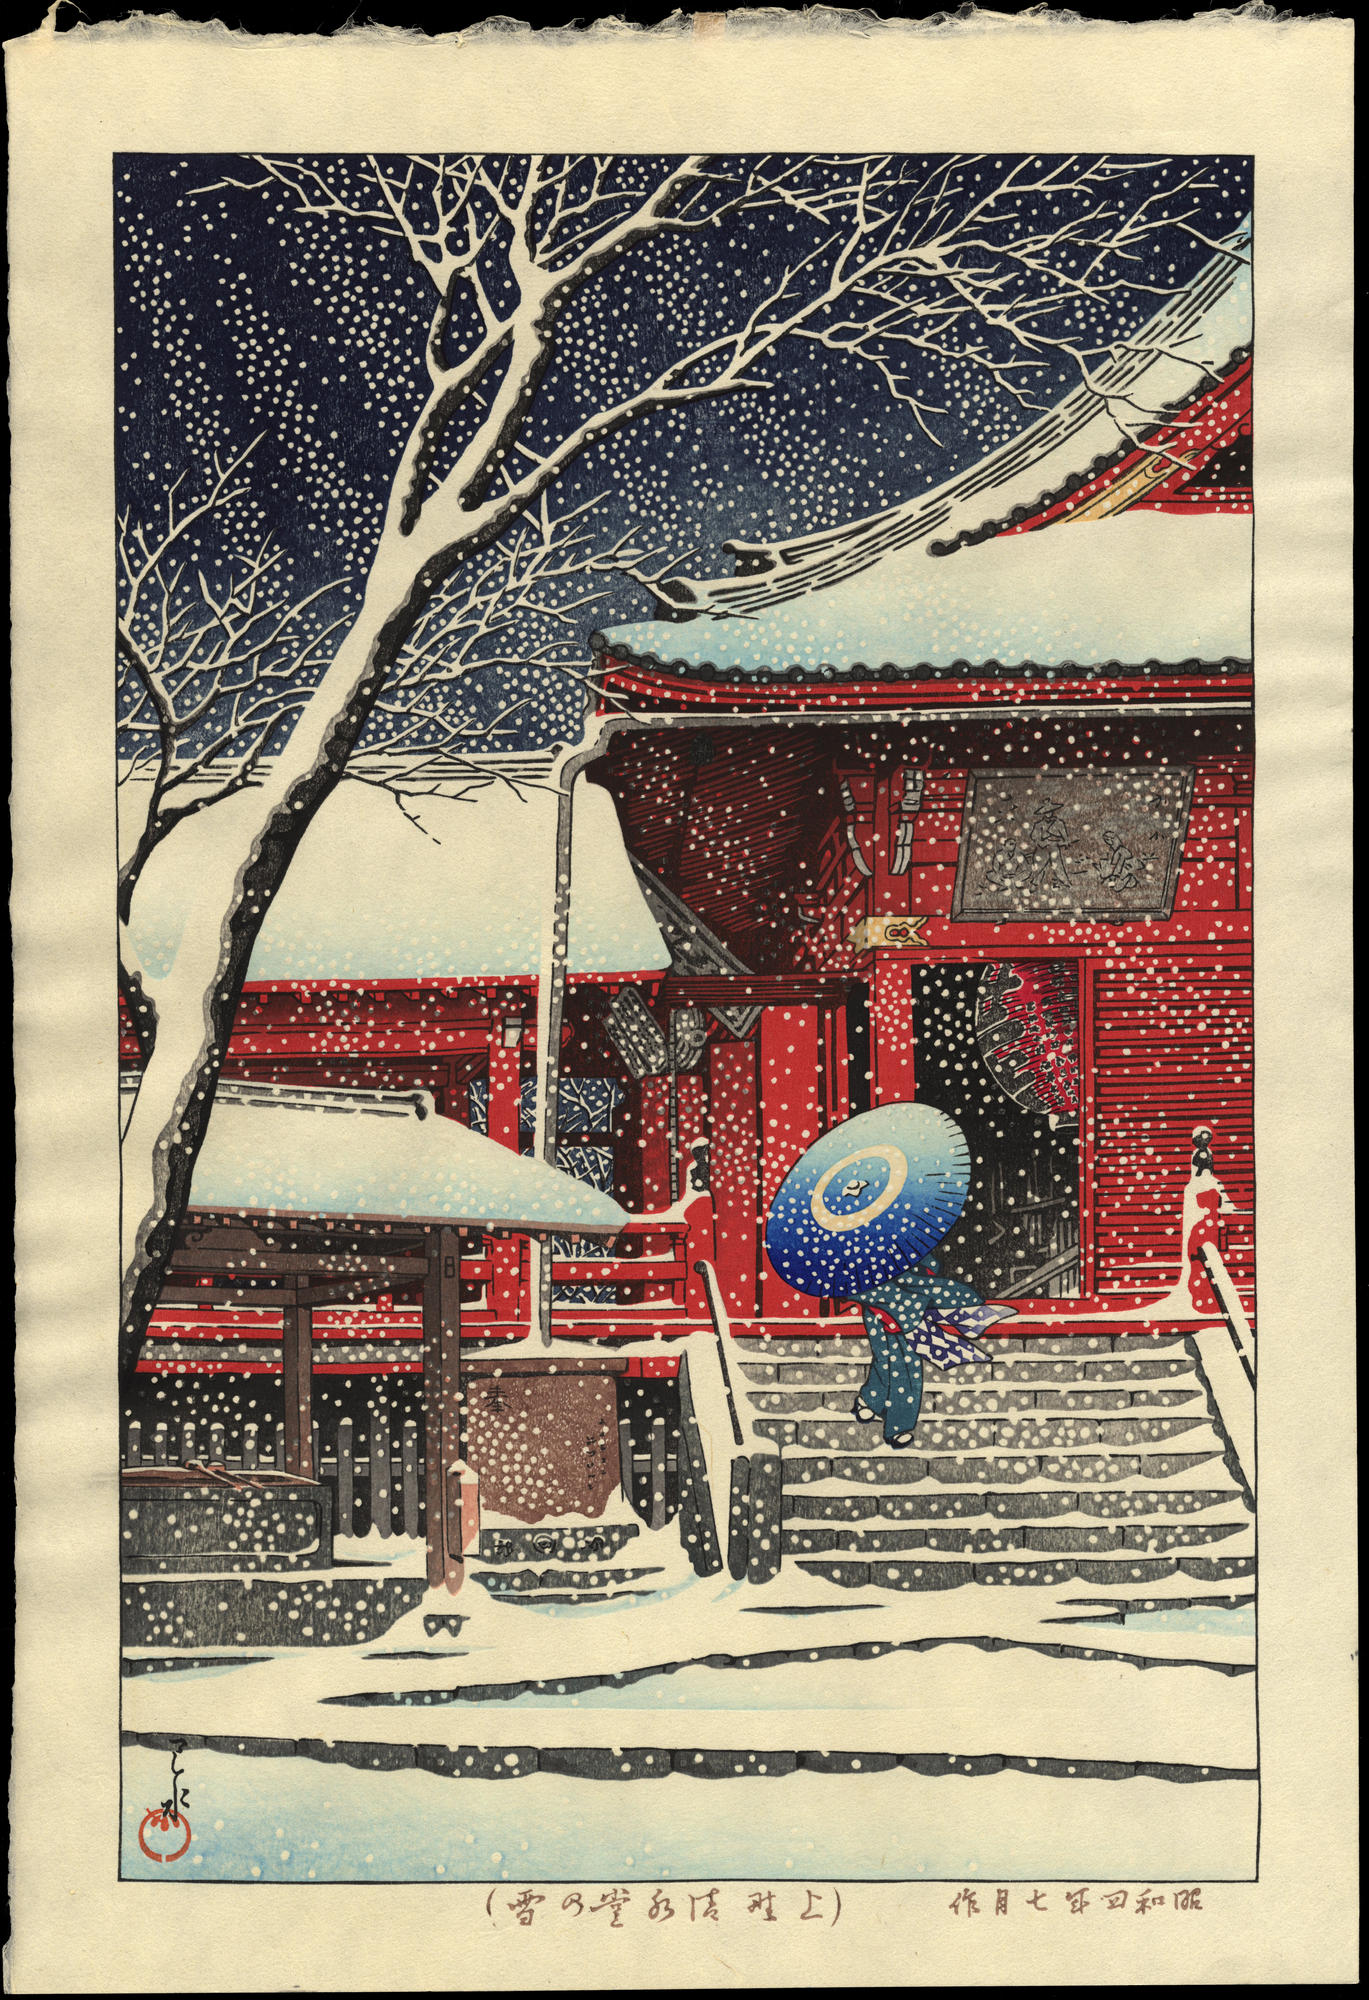 Kawase Hasui: Snow at Ueno Kiyomizudo - 上野清水堂の雪 - Ohmi Gallery - Ukiyo ...